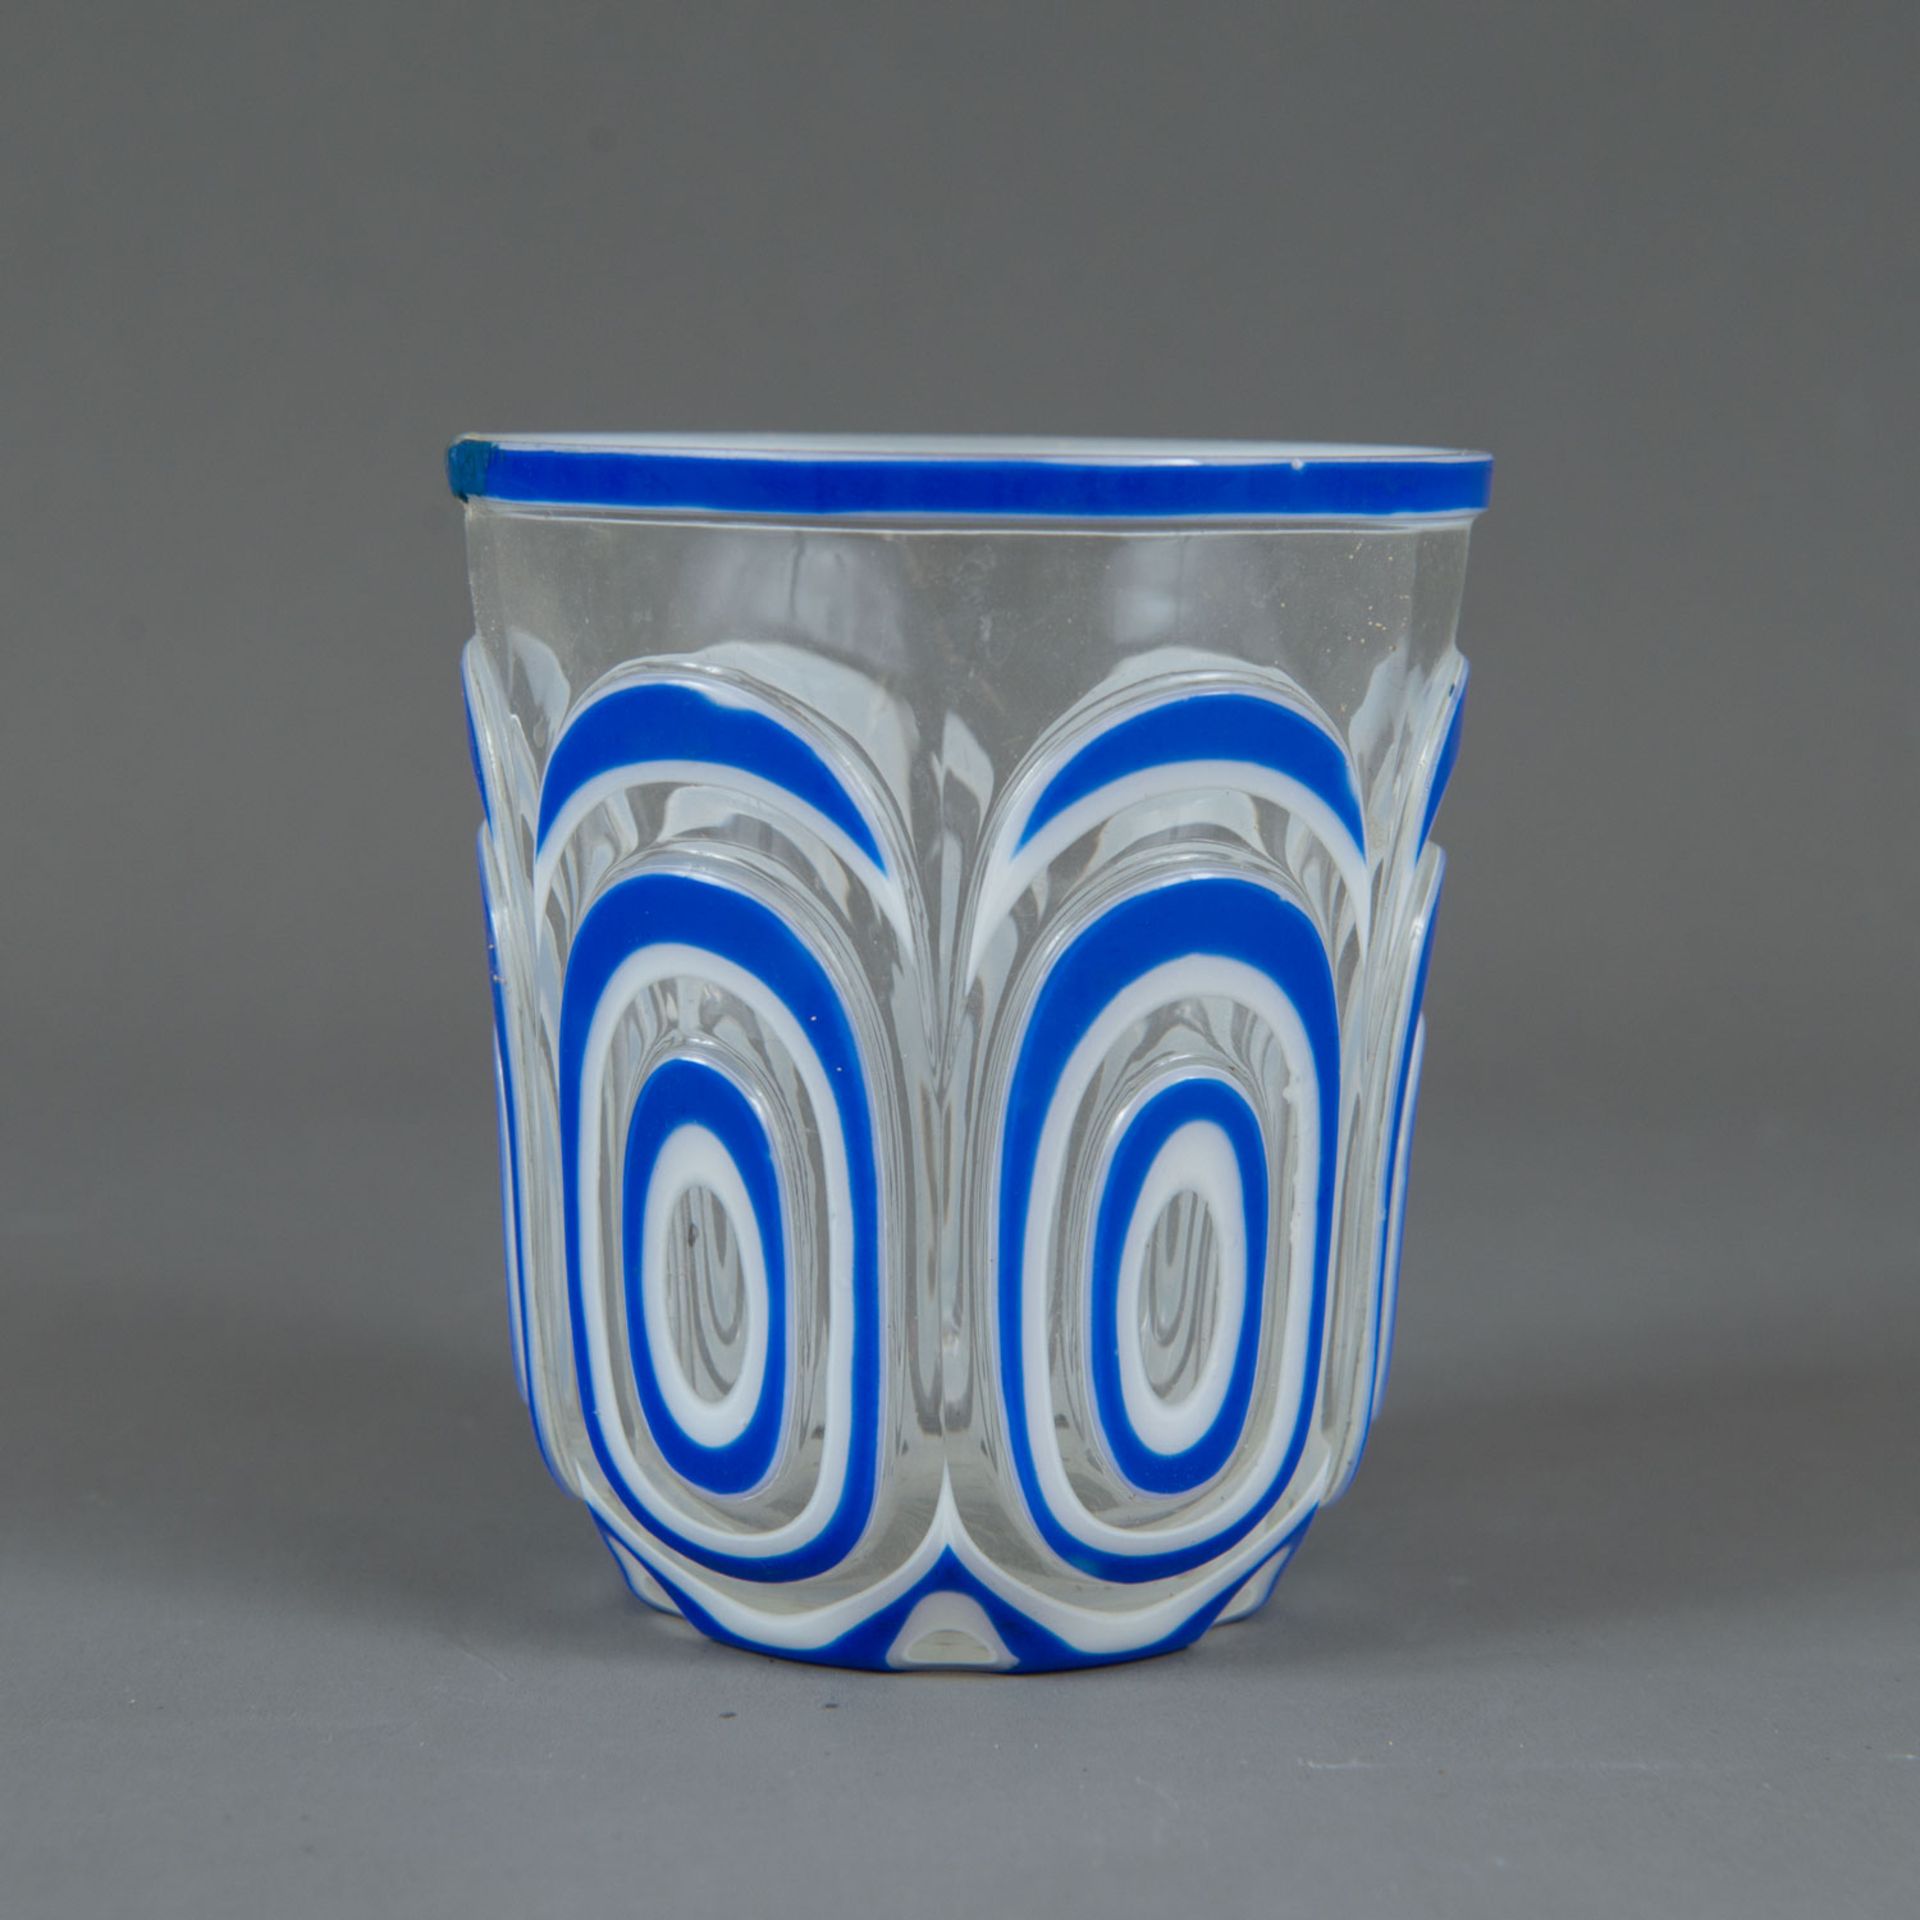 Bohemian Glass Beaker - Image 2 of 3